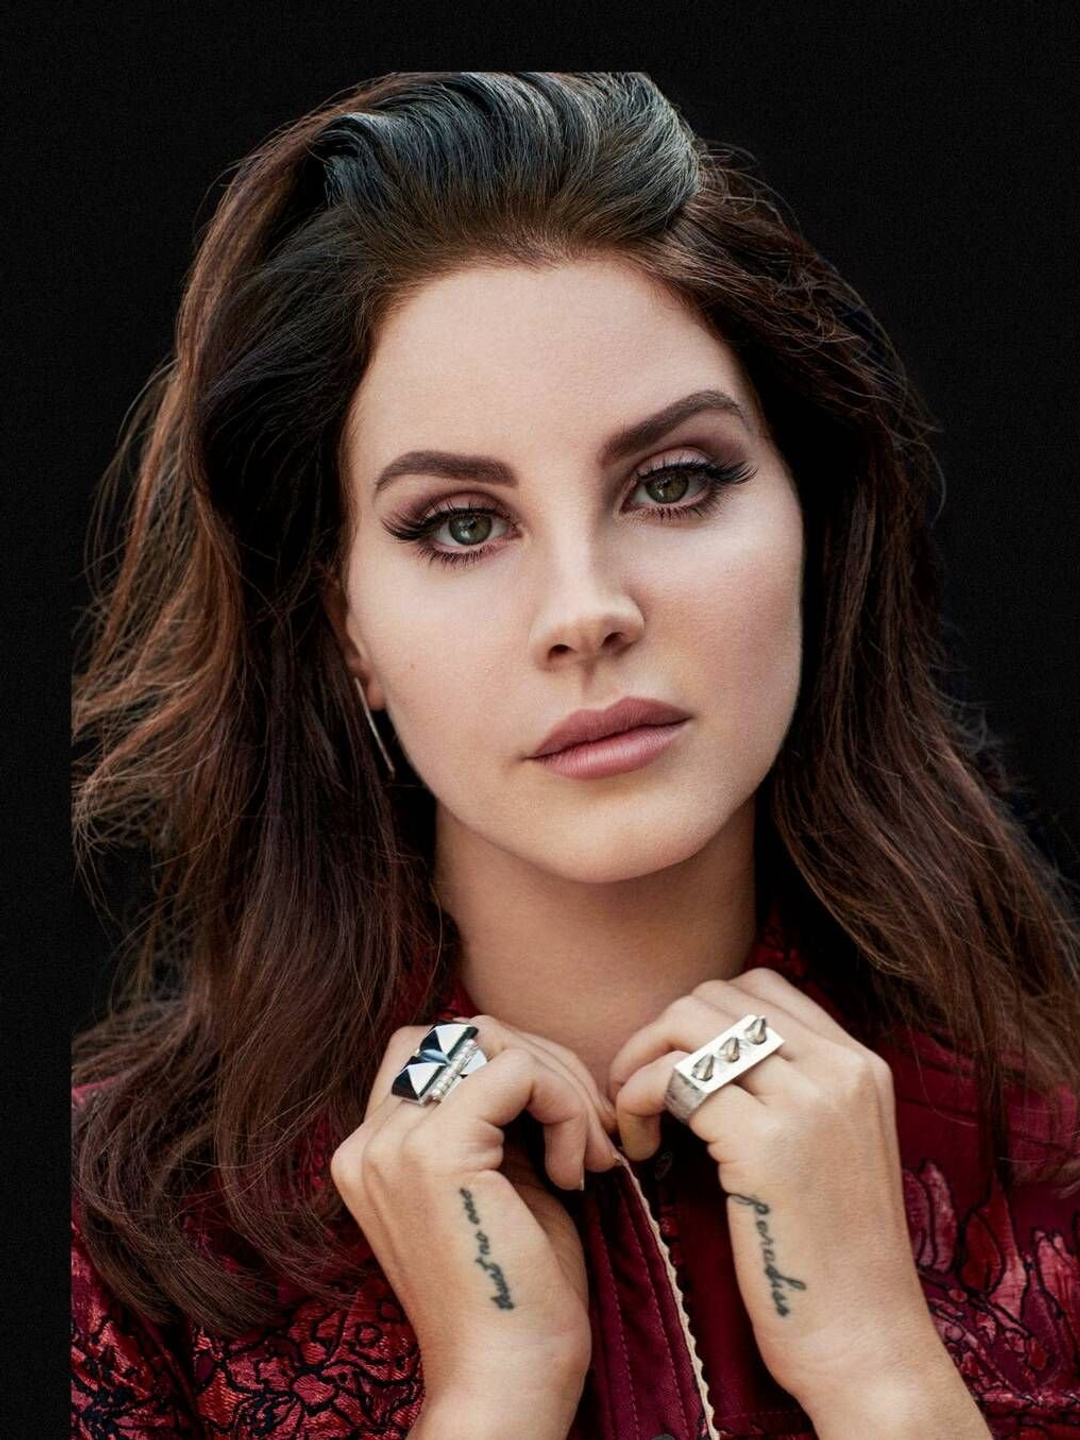 Lana Del Rey personal traits